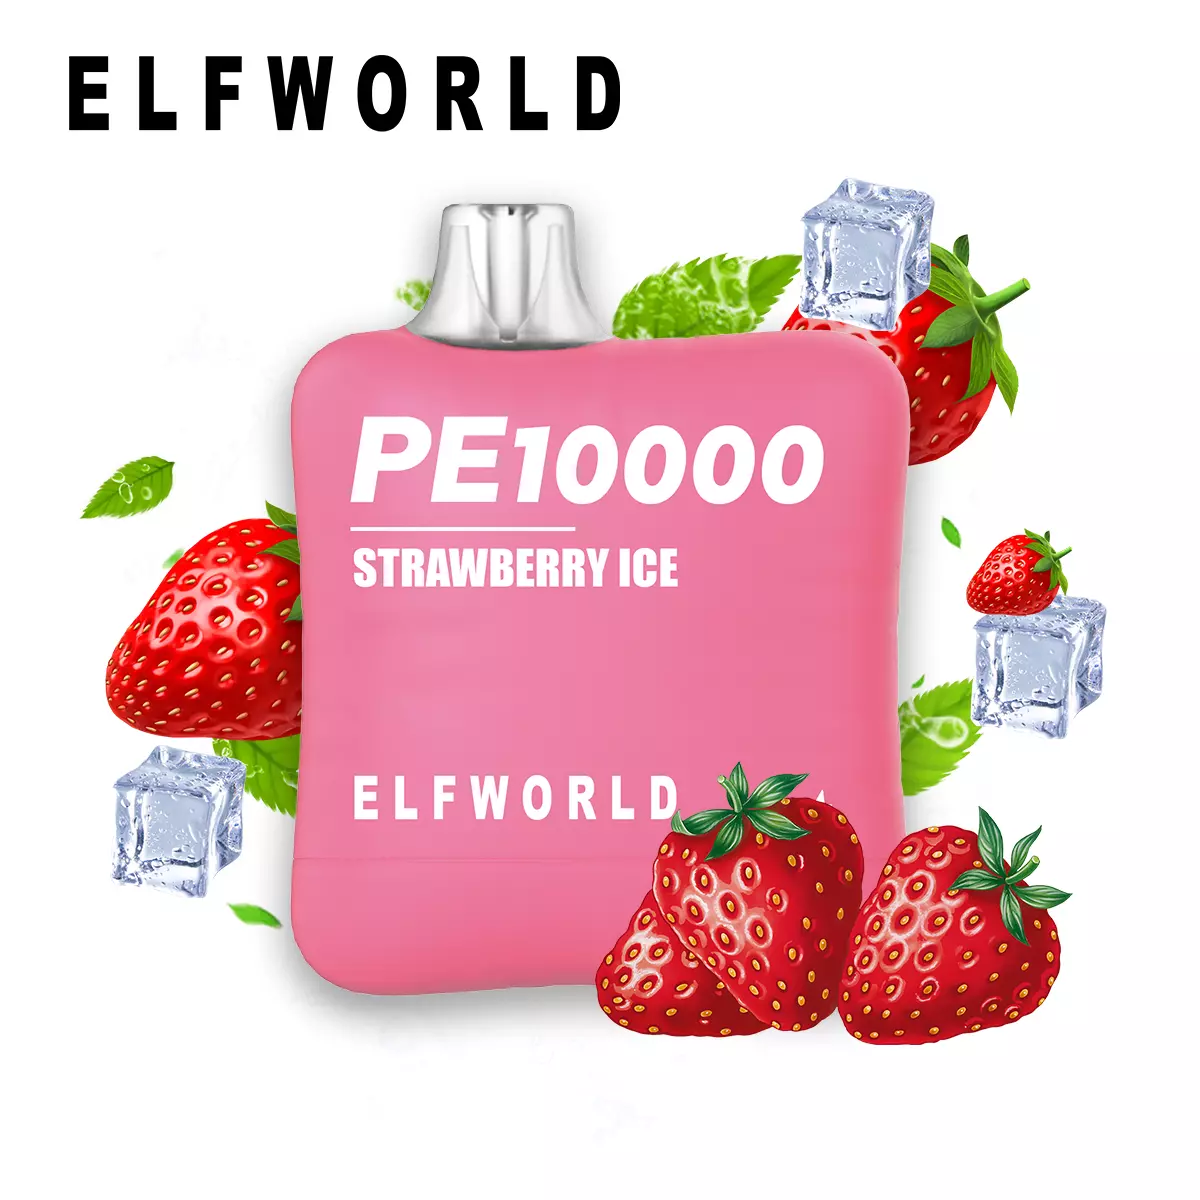 Elf World PE 10000 Strawberry Ice